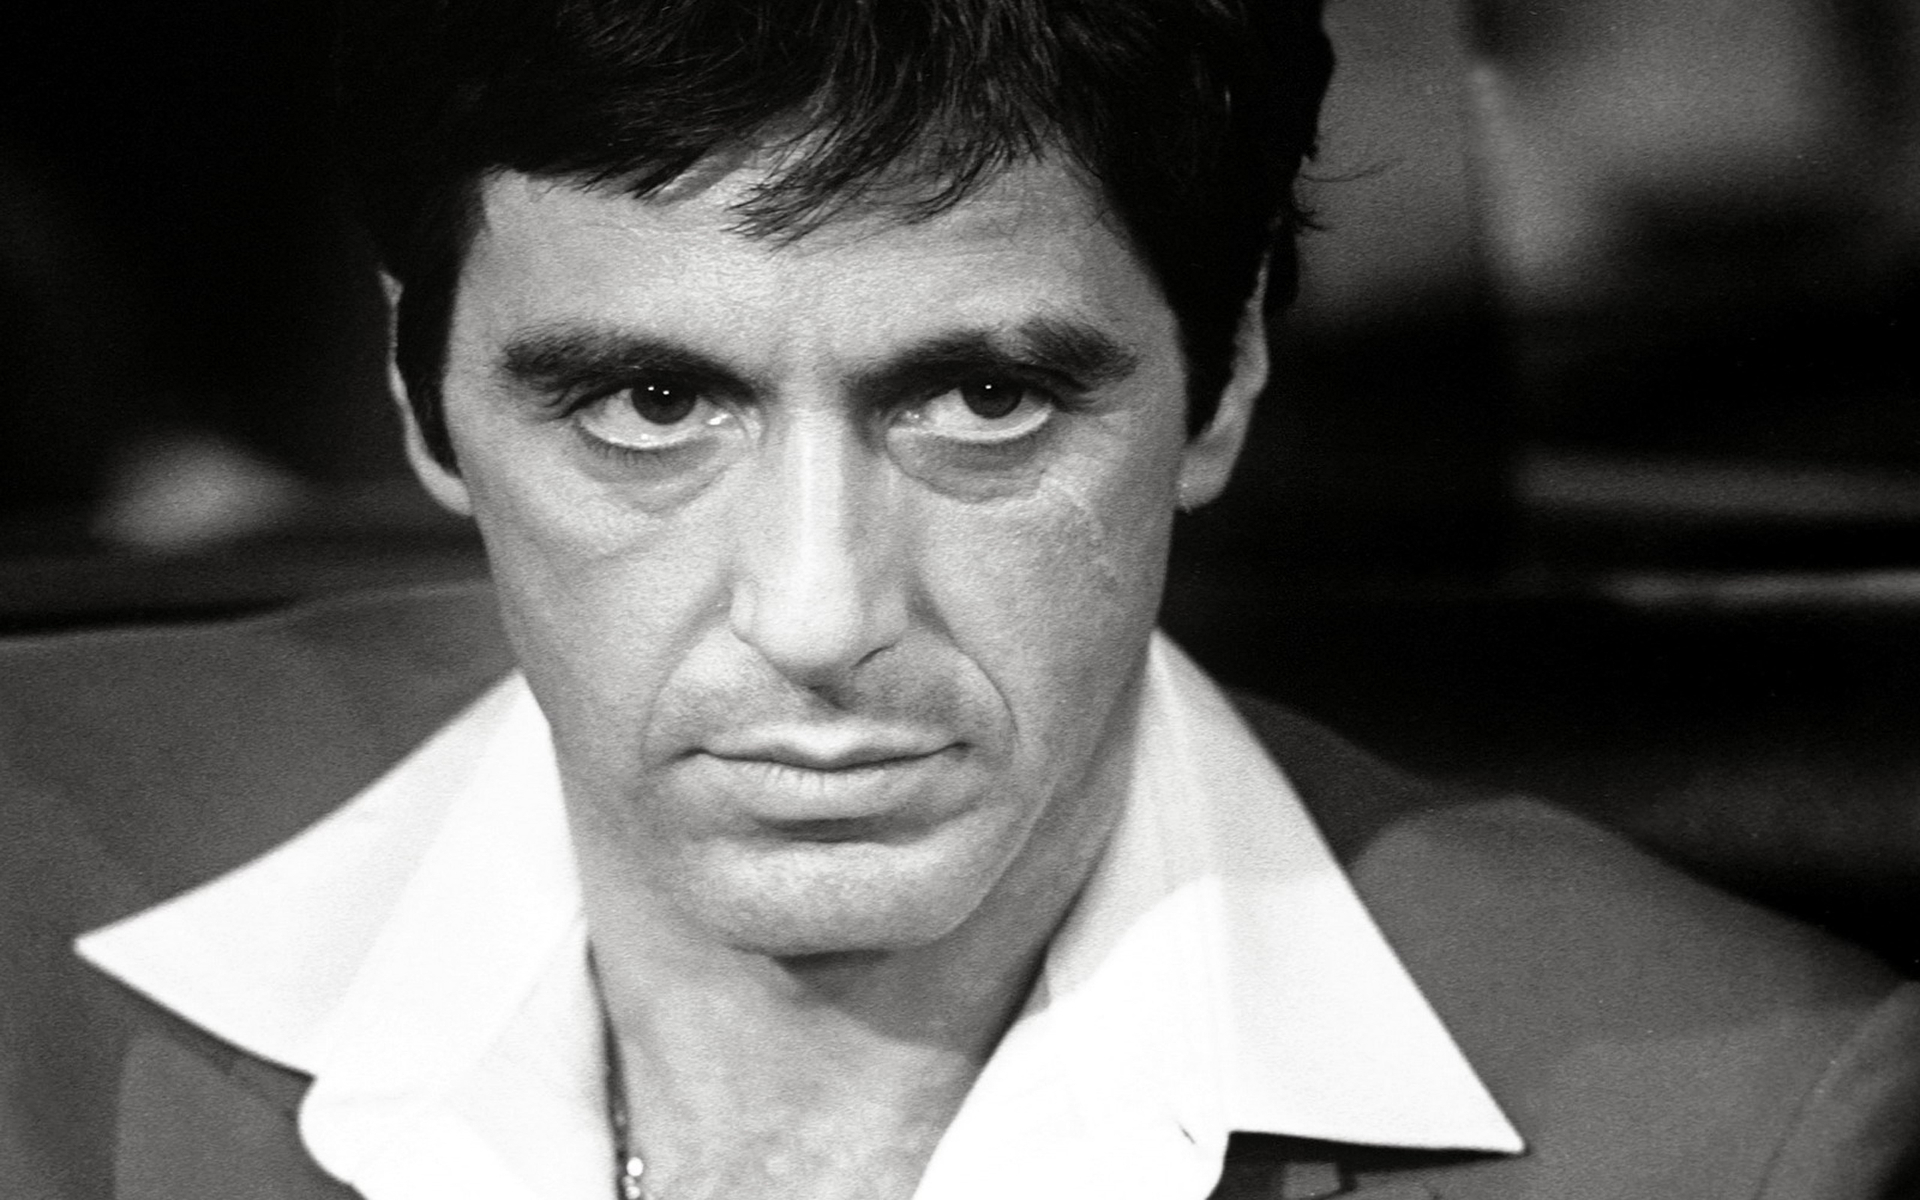 Al Pacino as "Scarface"